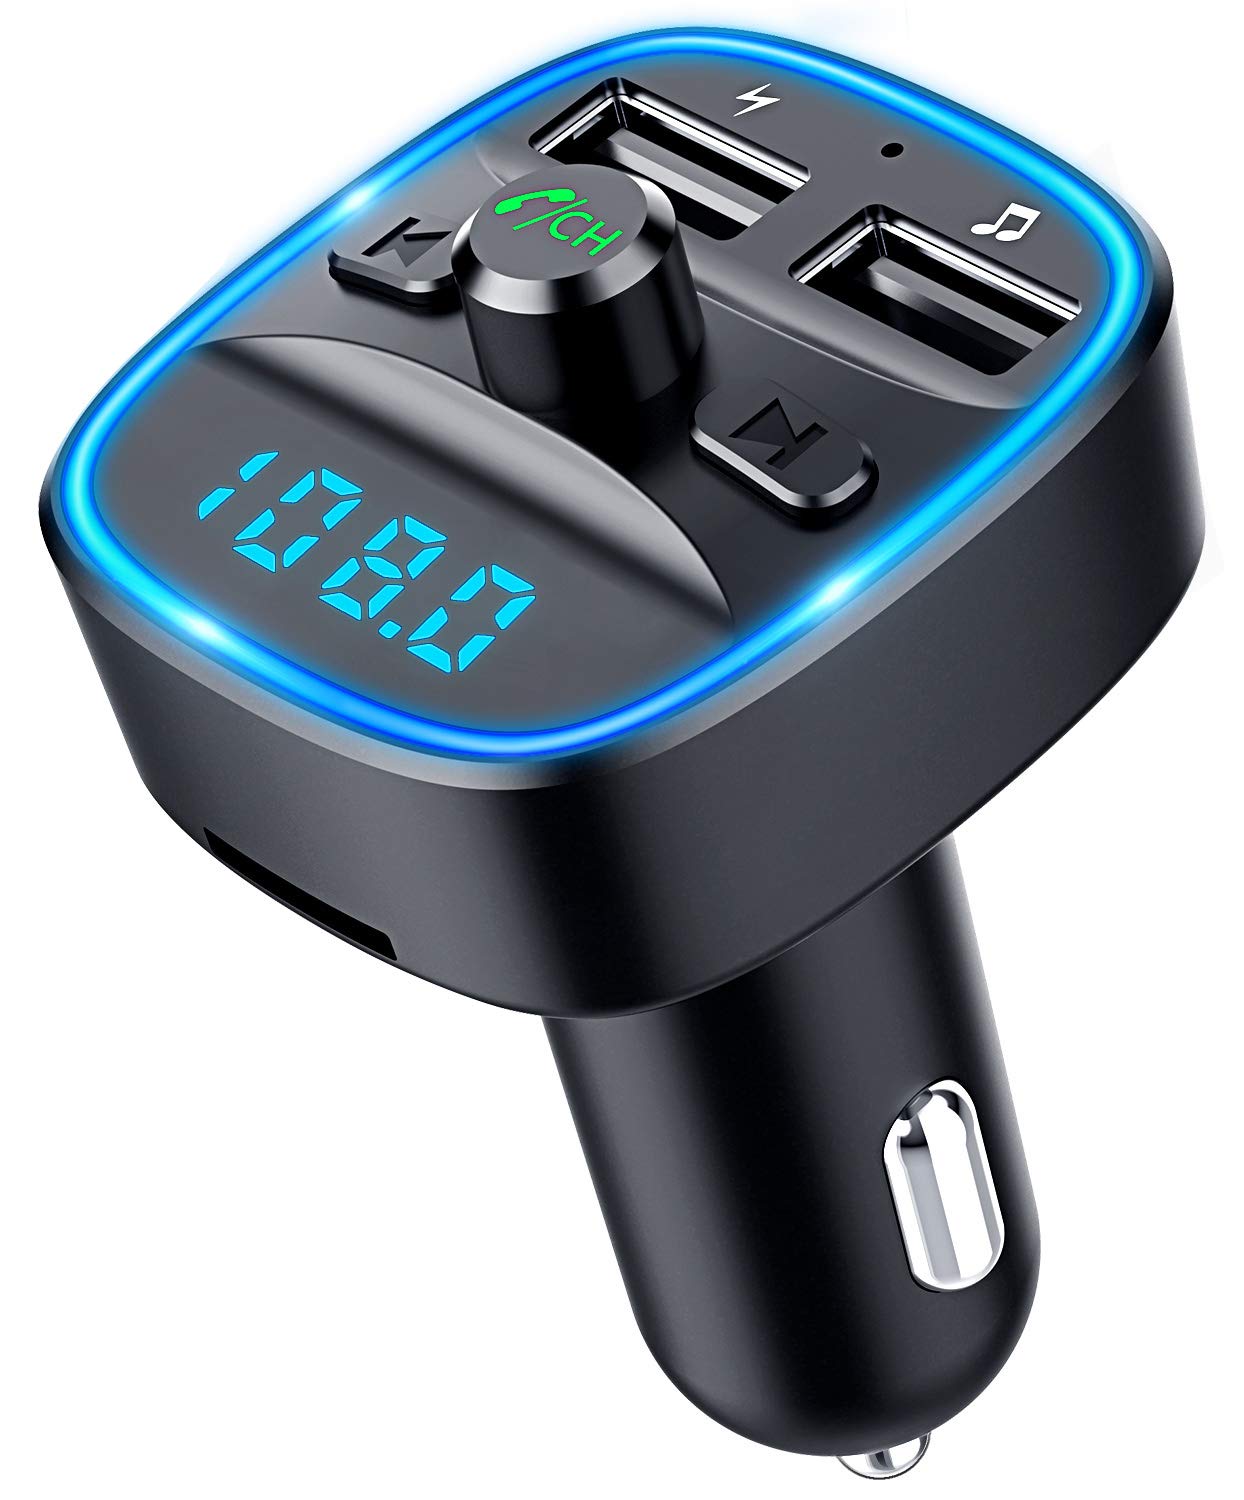 ⭐ Auto Car Bluetooth FM Transmitter KFZ Radio Adapter freisprecheinrichtung DE⭐